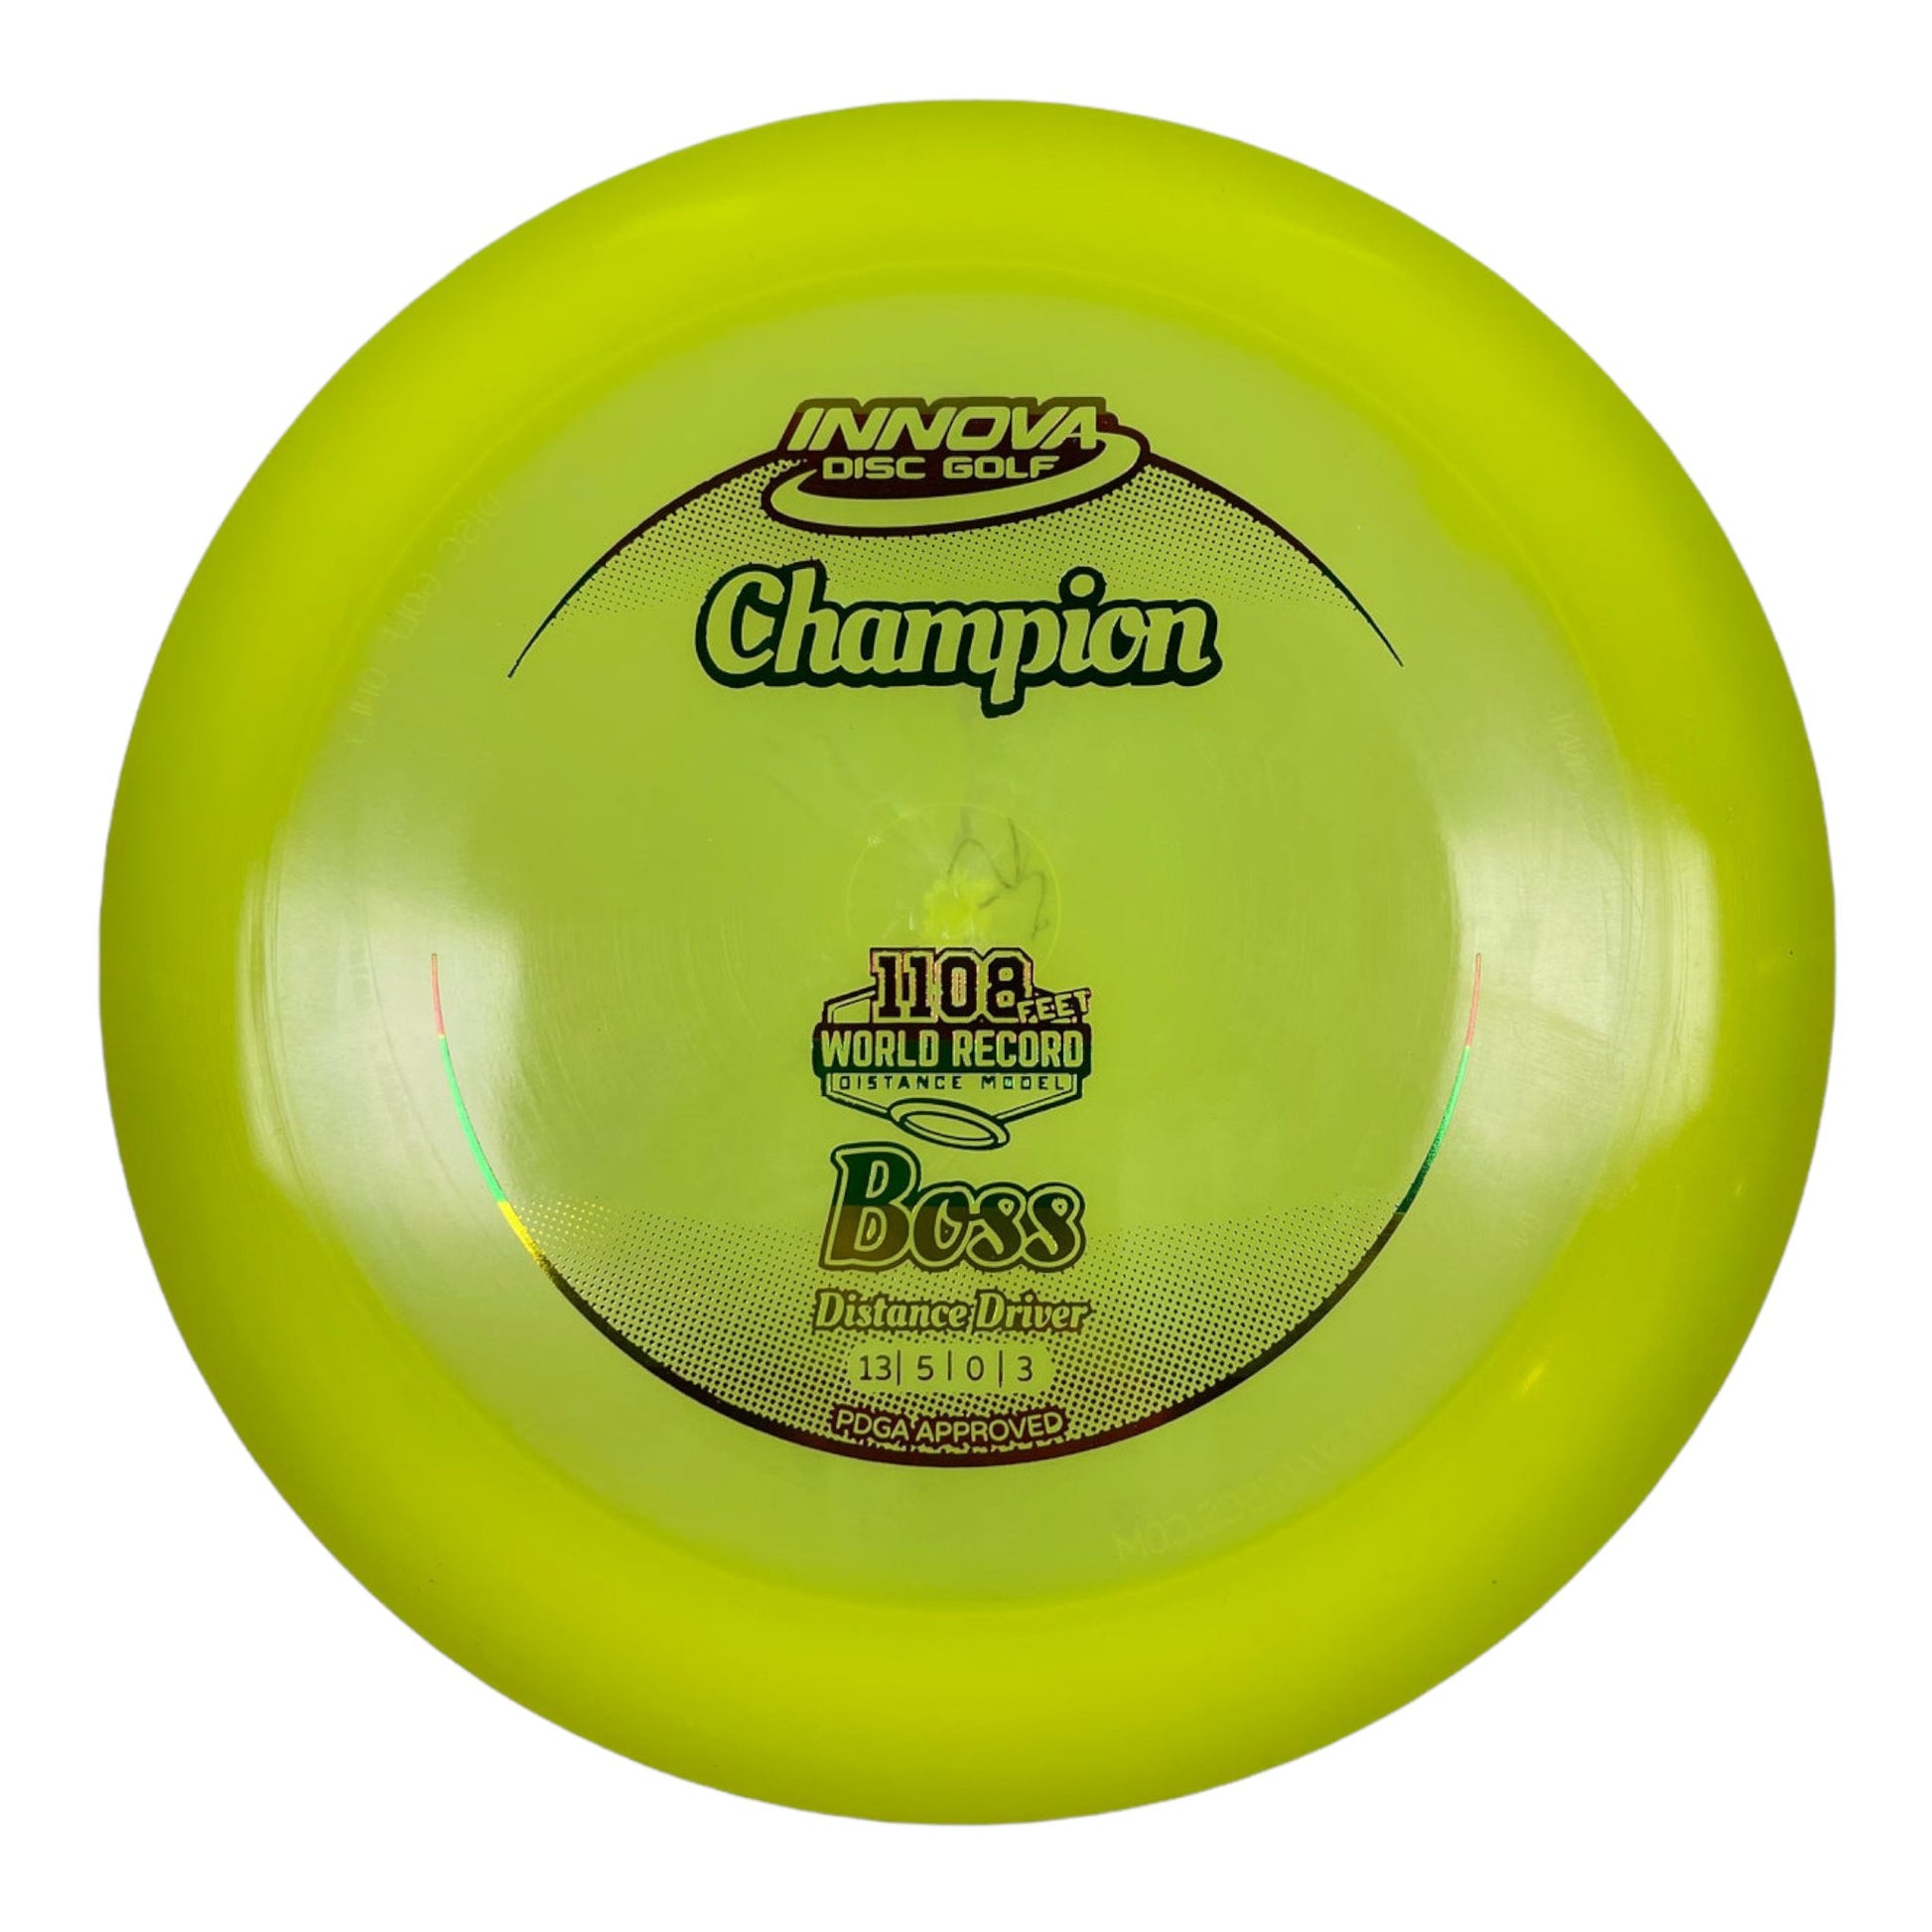 Innova Champion Discs Boss | Champion | Yellow/Rasta 175g Disc Golf